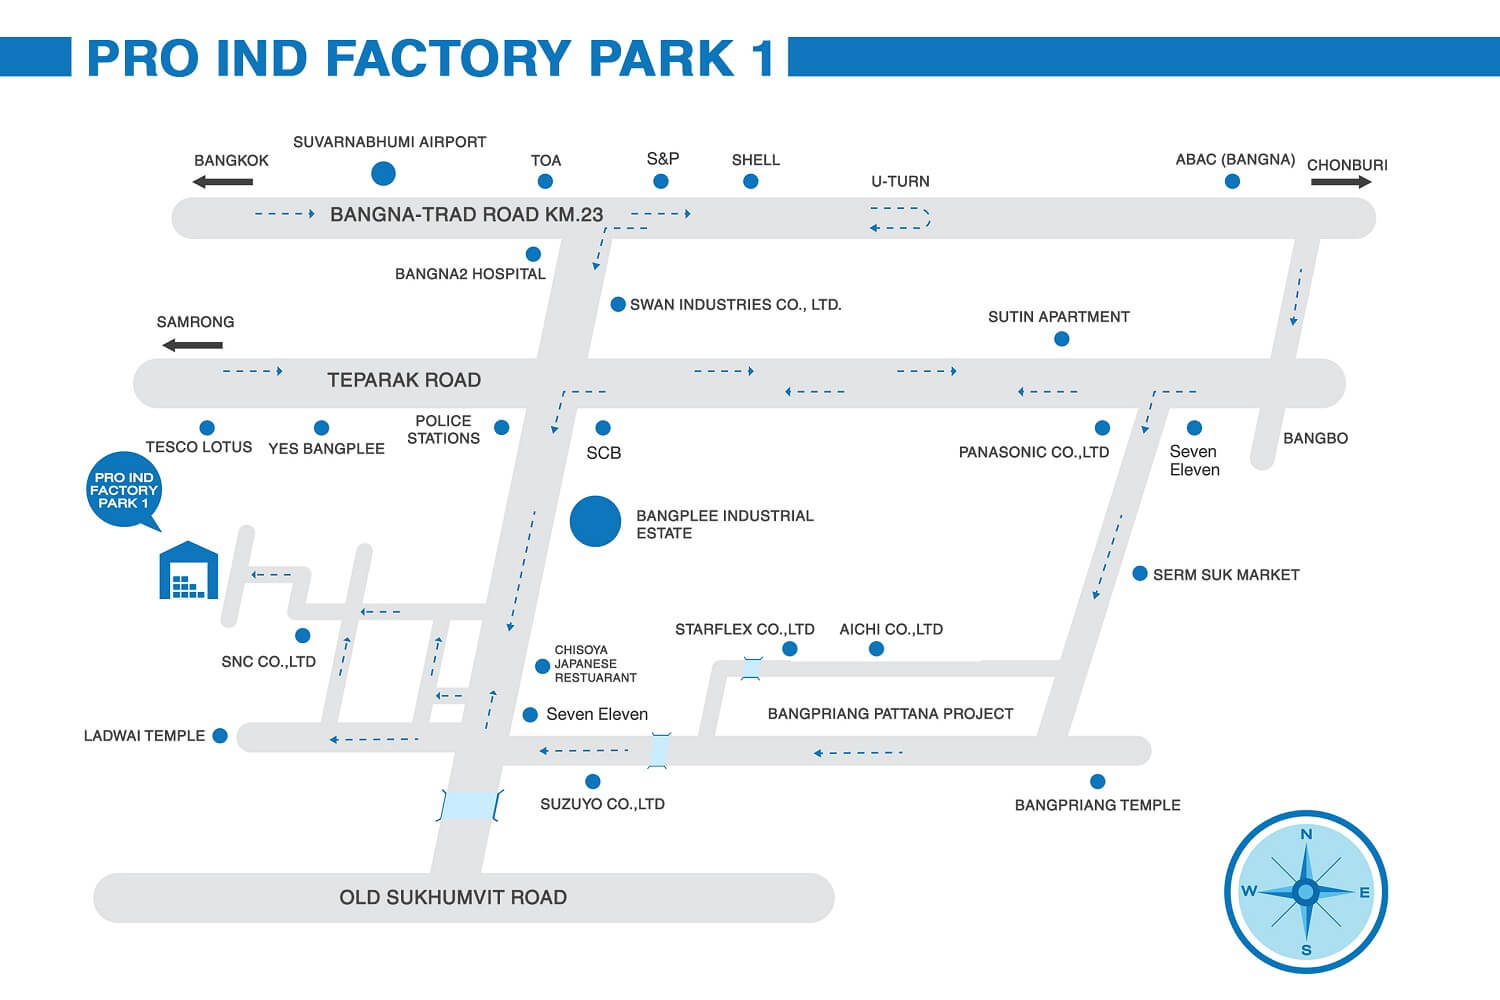 Pro Ind Factory Park 1 Project Map